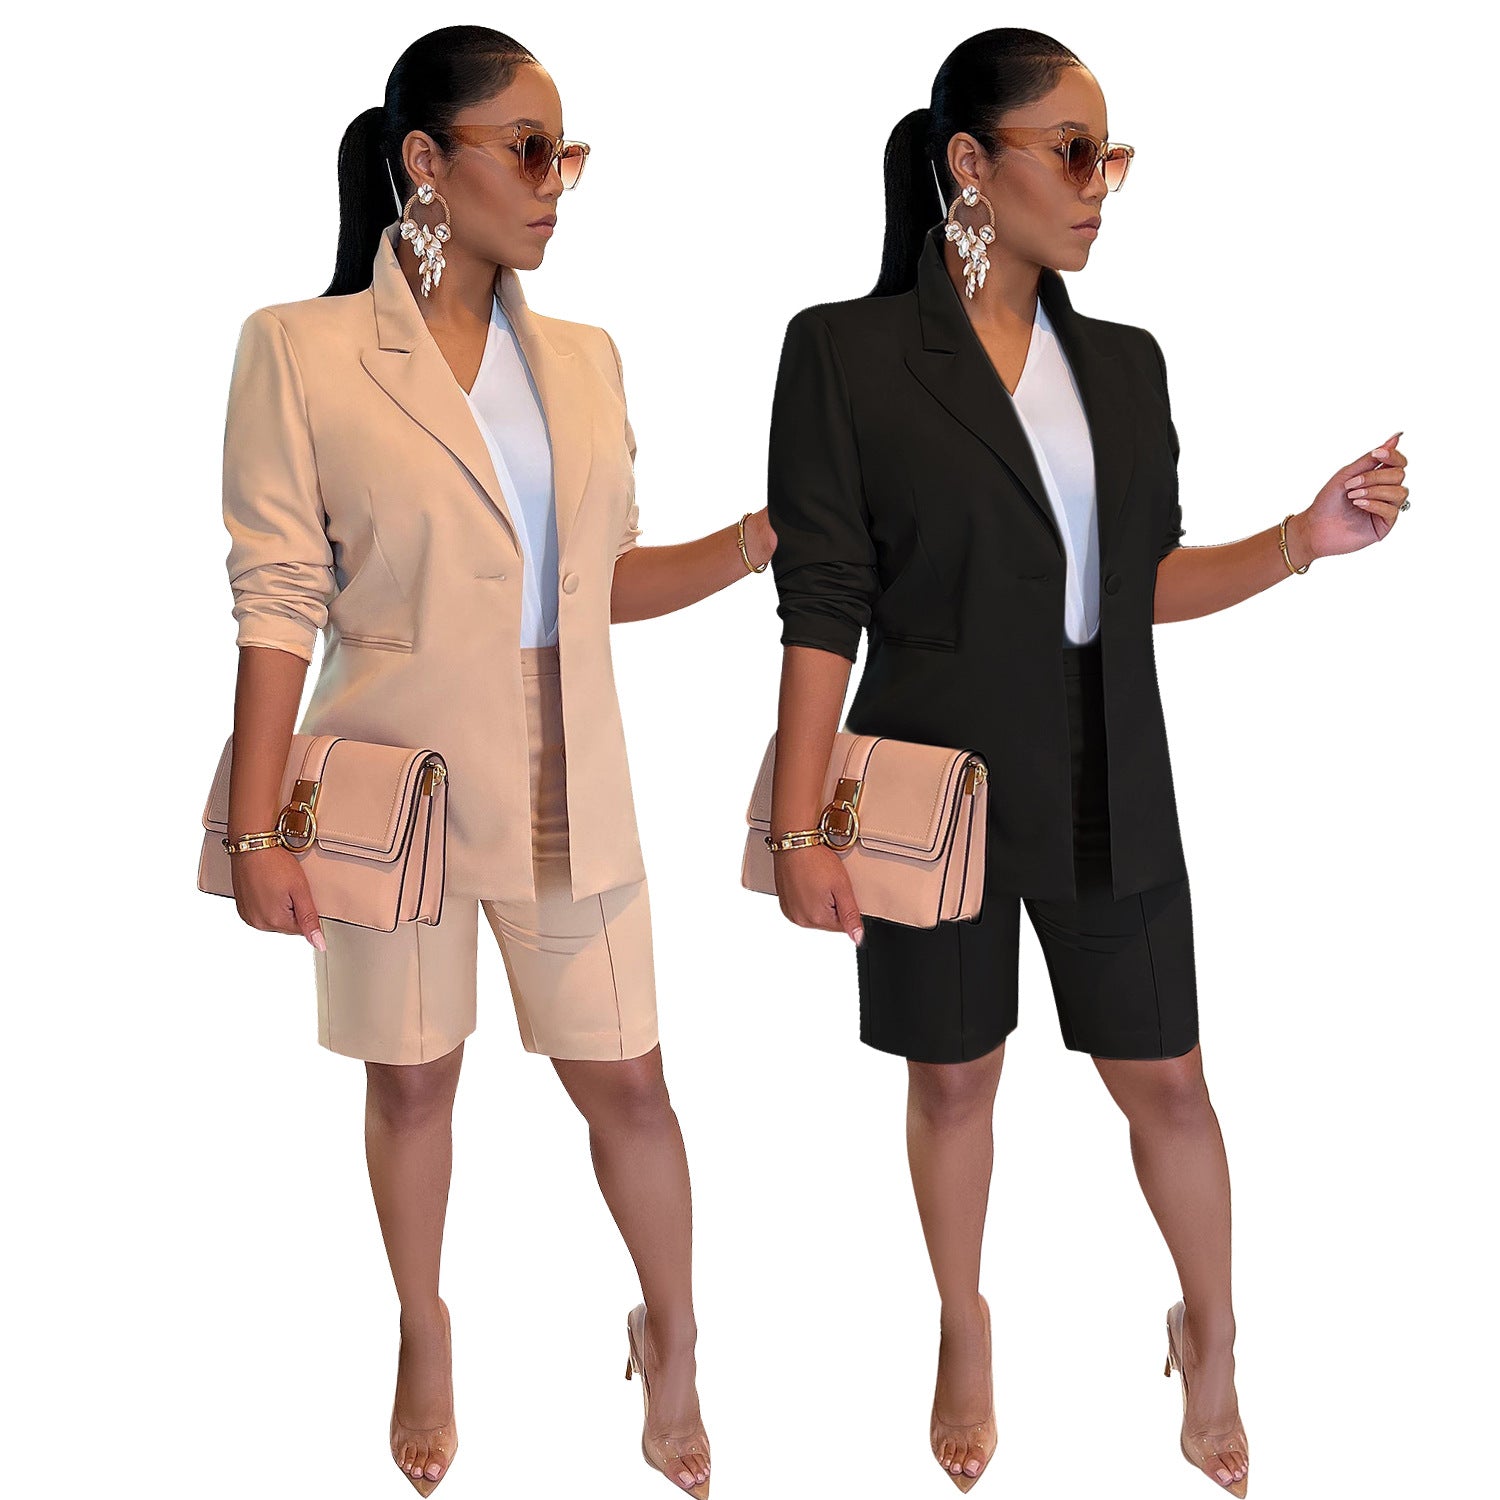 Plus Color Women's Polyester Coat Shorts Two-piece Suits